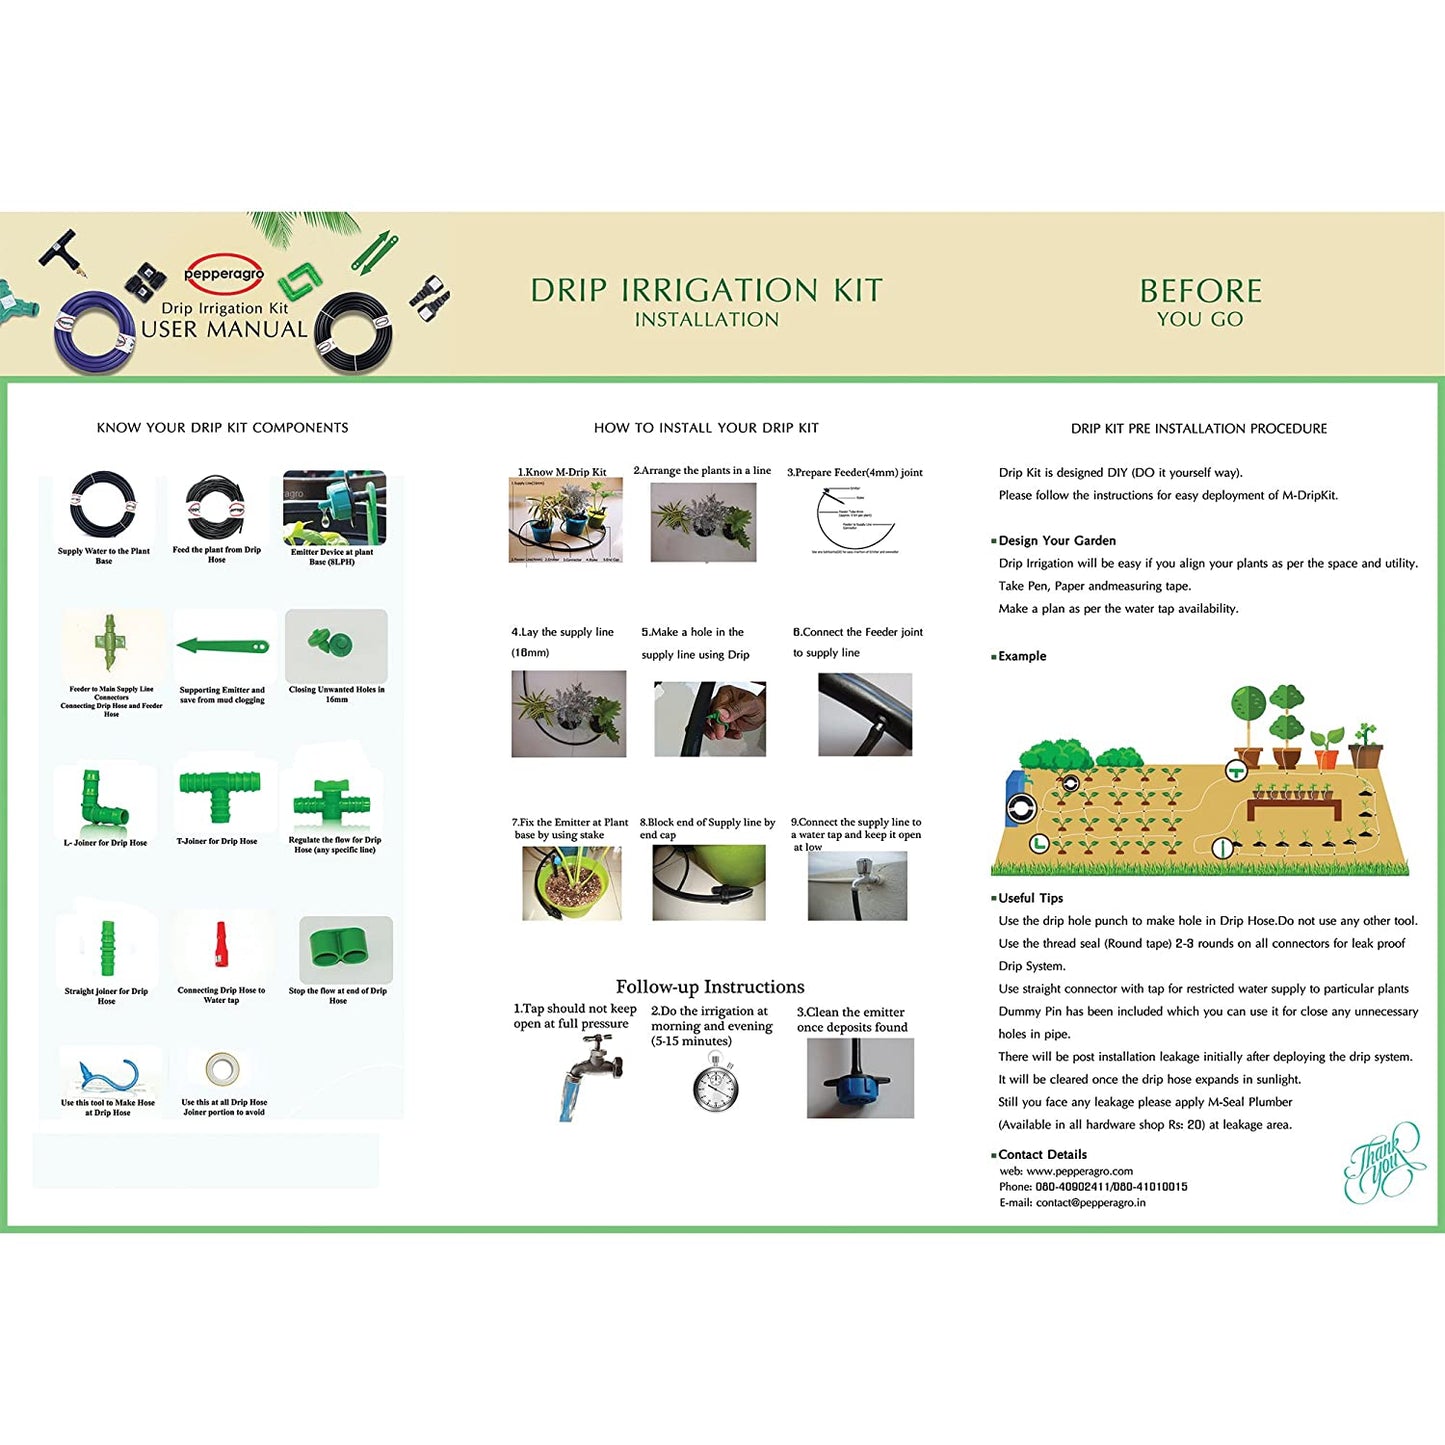 M-DripKit Drip Irrigation Garden Watering Plants Drip Kit (200 Plants)